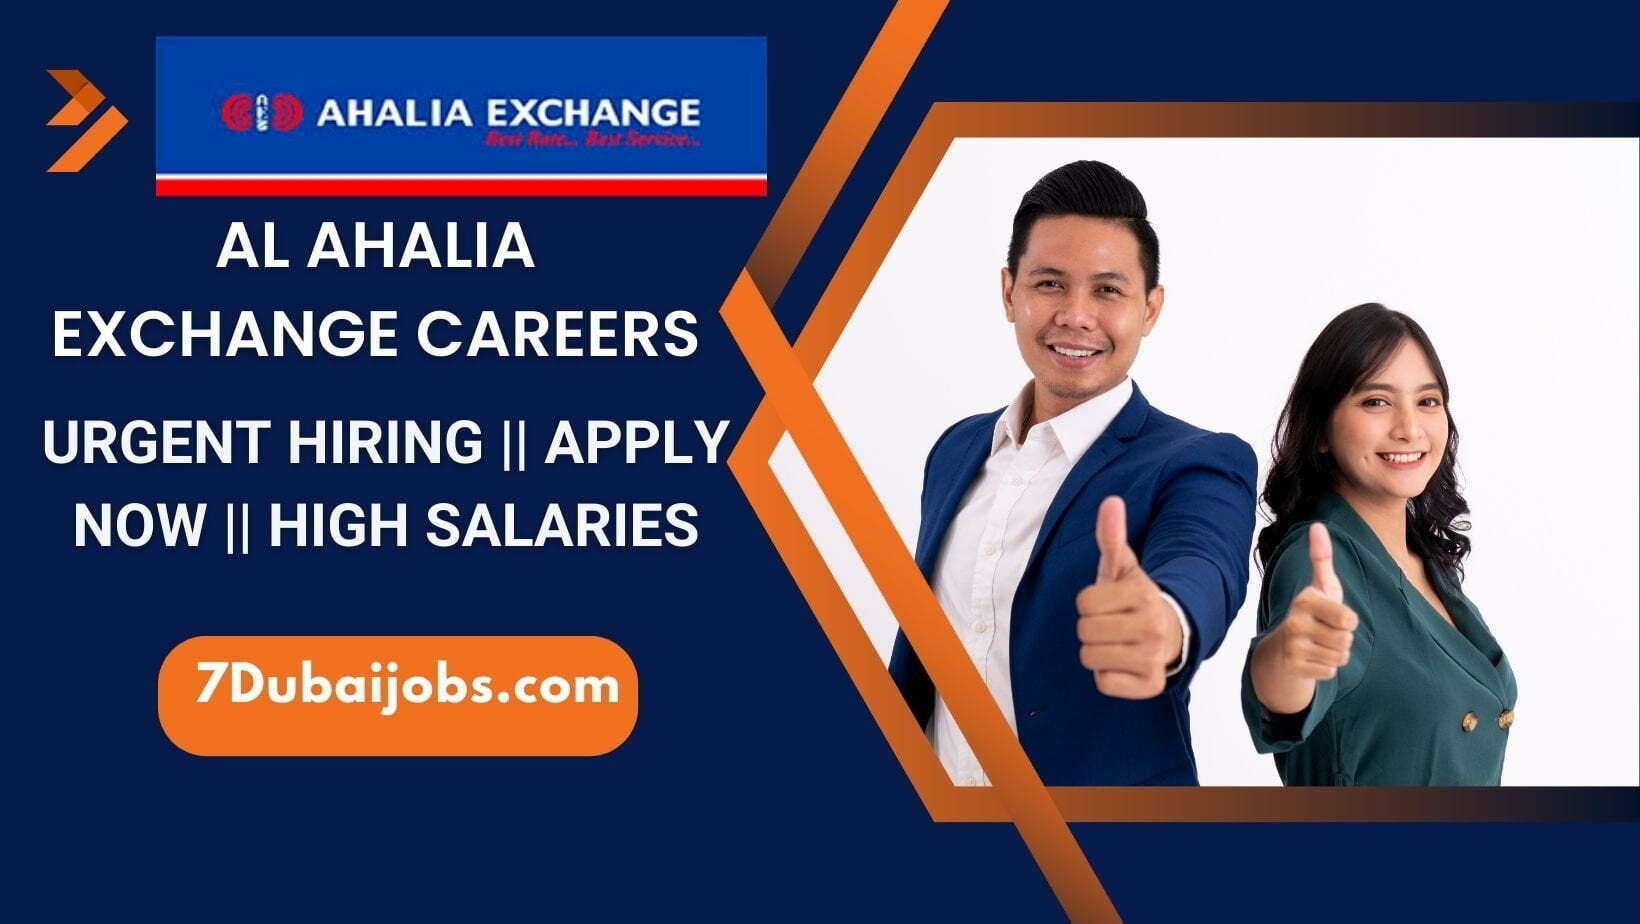 Al Ahalia Exchange Careers